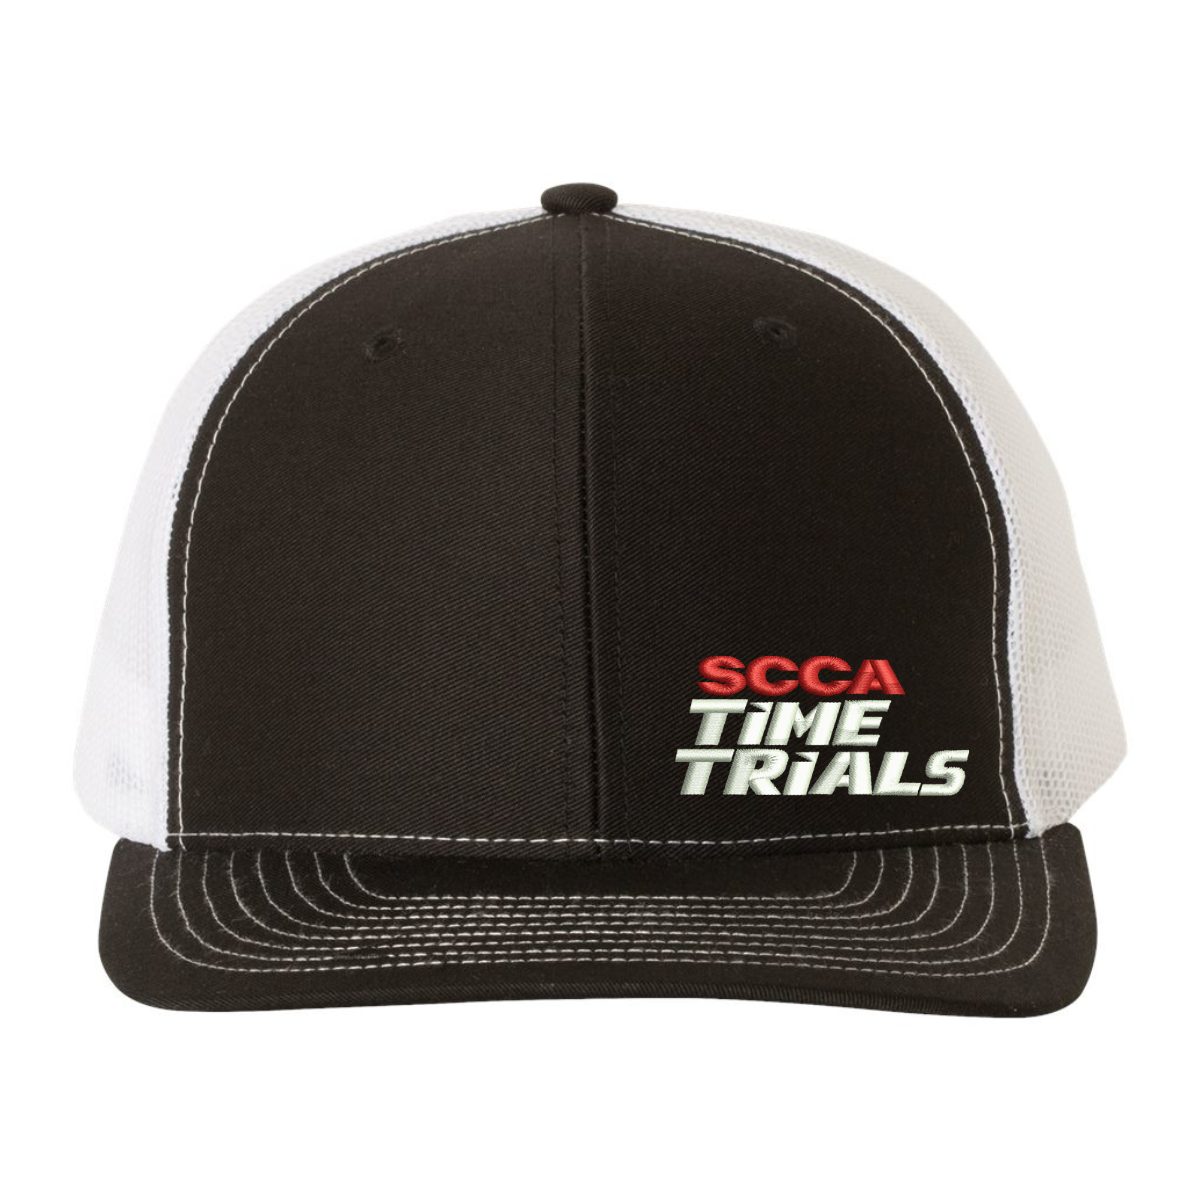 SCCA Time Trials Trucker Cap